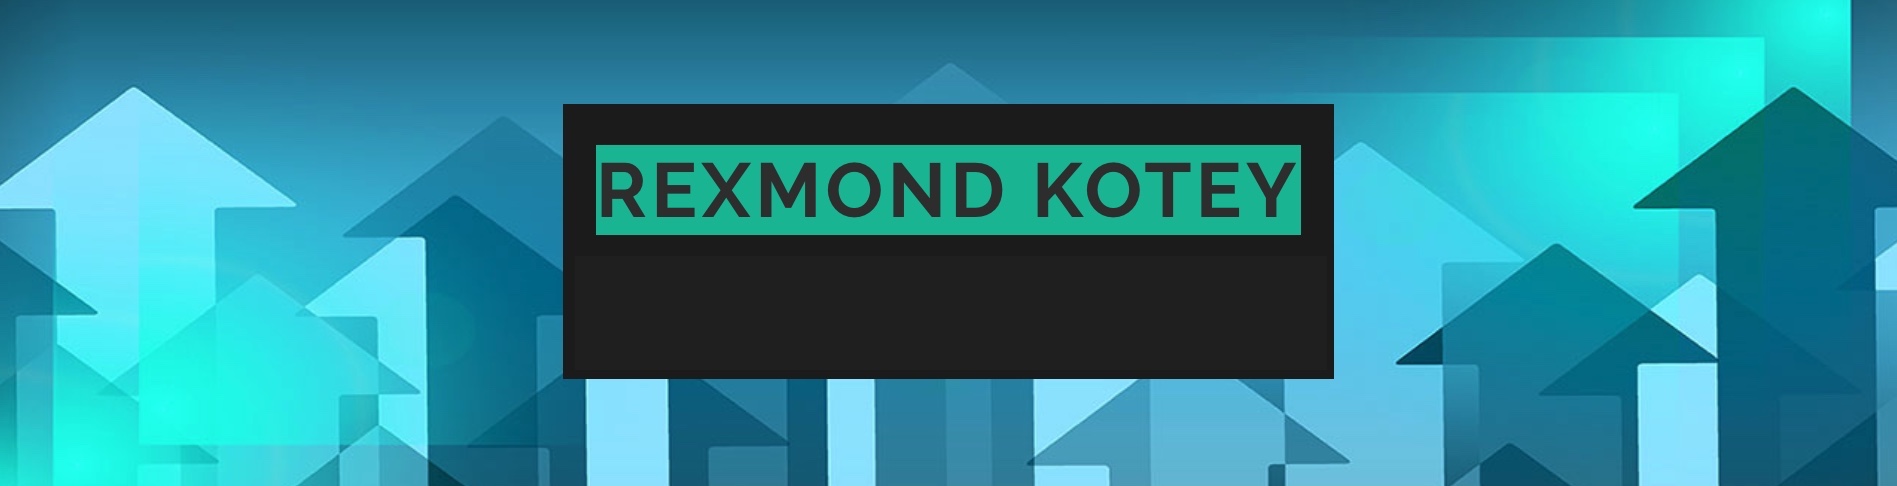 Rexmond Kotey Logo